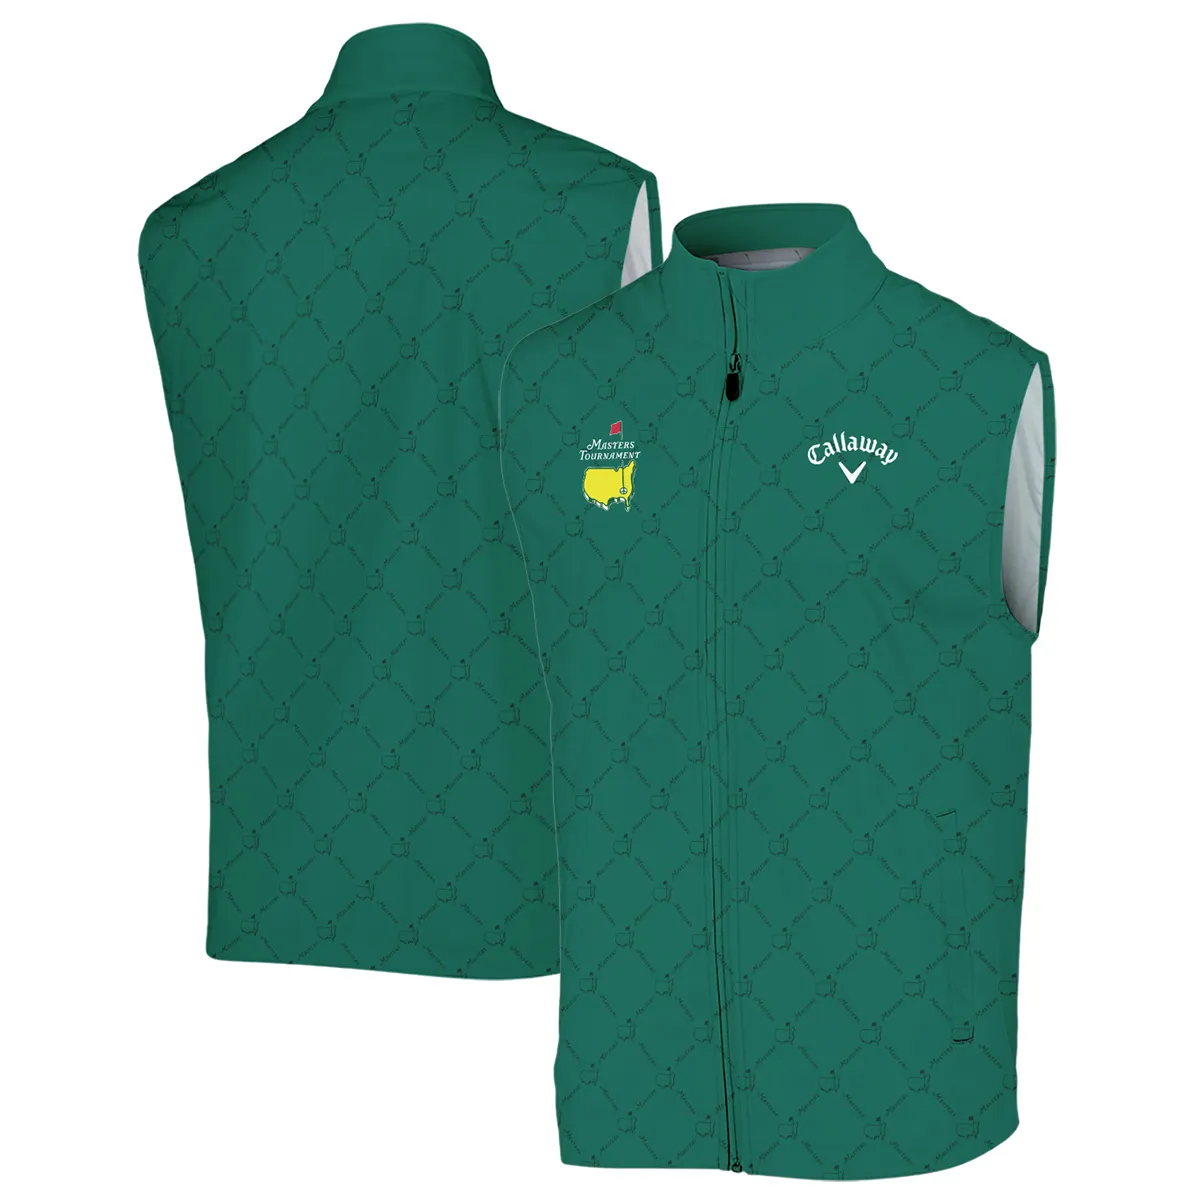 Golf Sport Pattern Color Green Mix Black Masters Tournament Callaway Quarter-Zip Jacket Style Classic